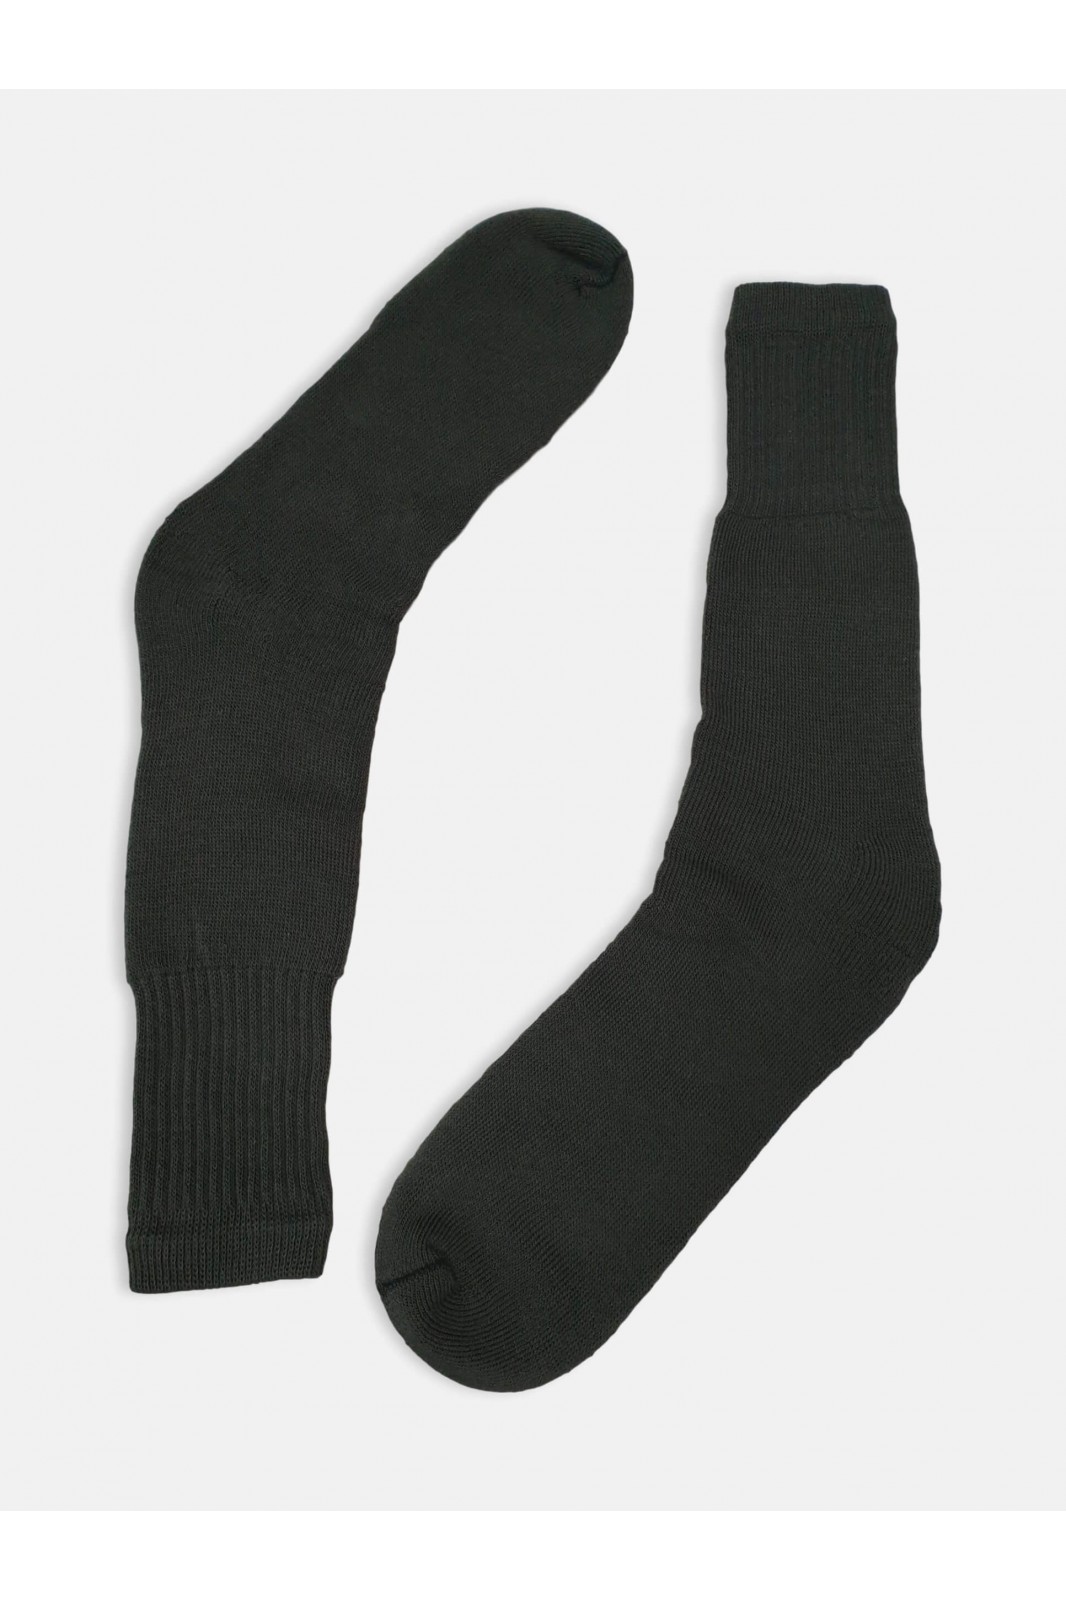 Mens Army Socks - Cotton towel fabric (2 Pairs)